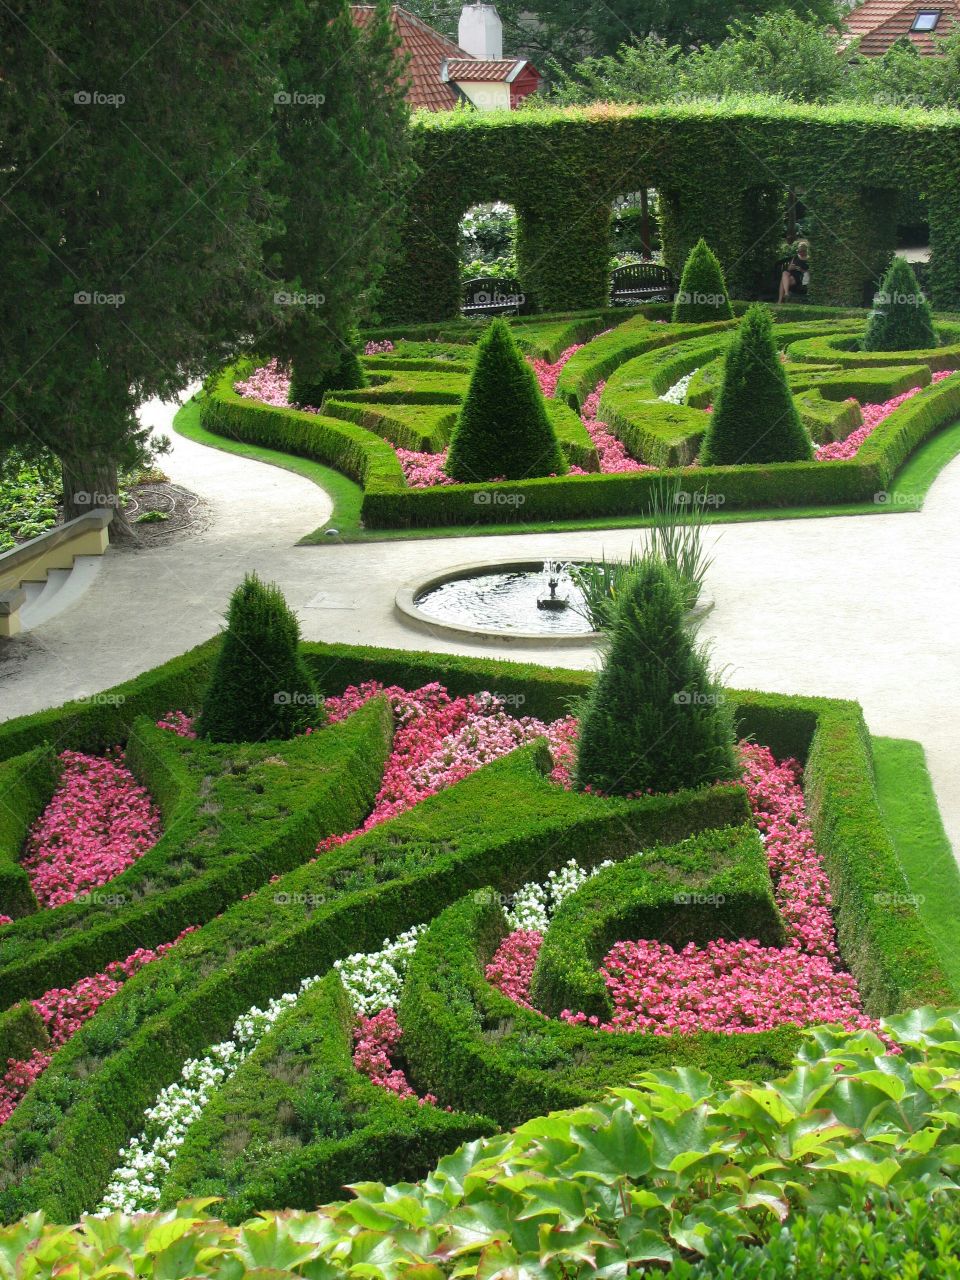 The Vrtba Garden, Prague